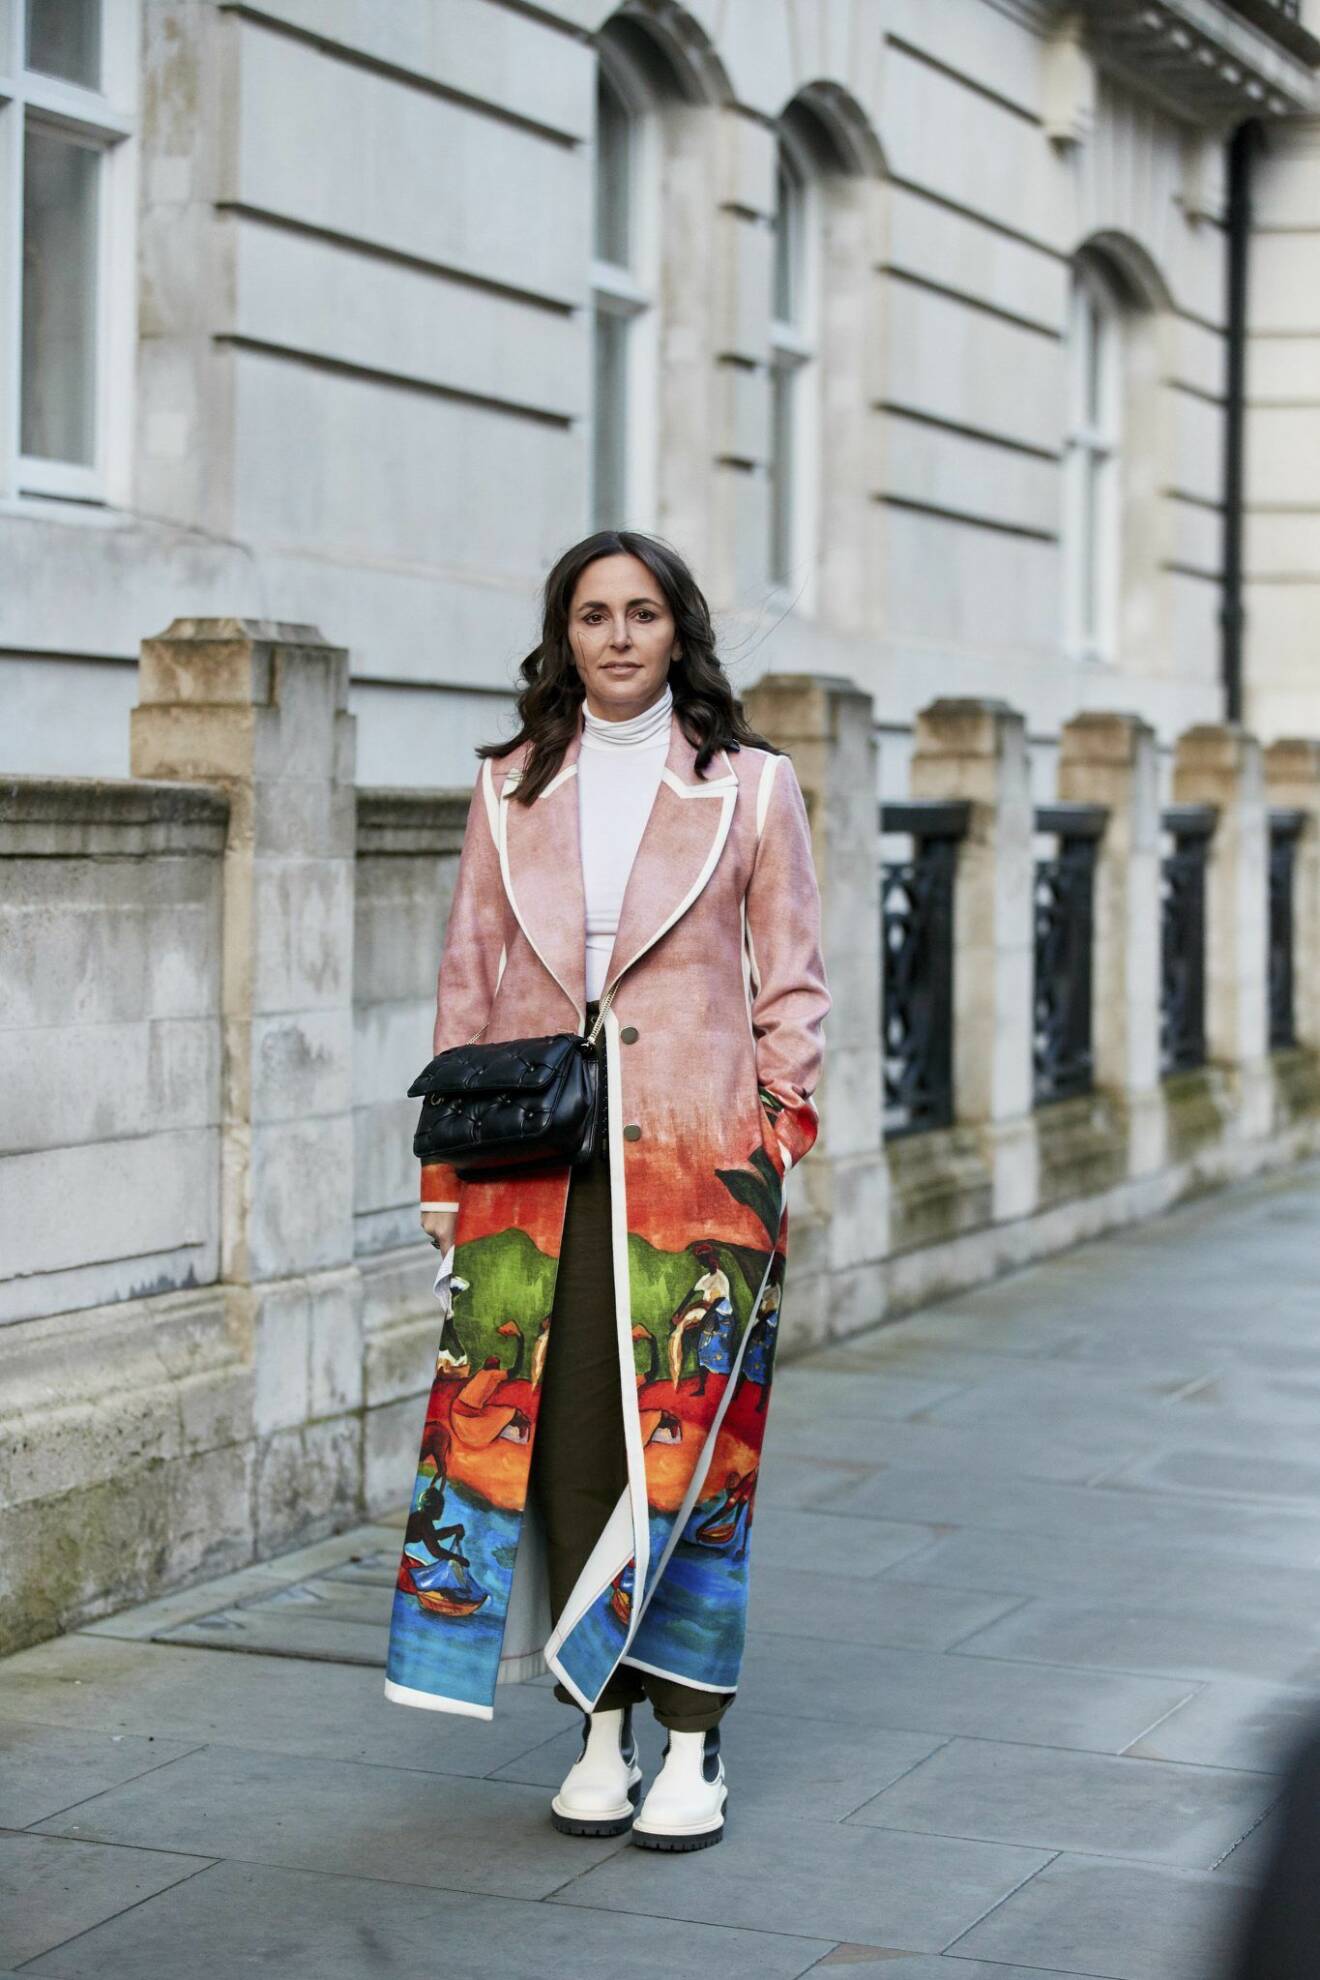 Streetstyle från London Fashion week, rosa trenchcoat med mönster.